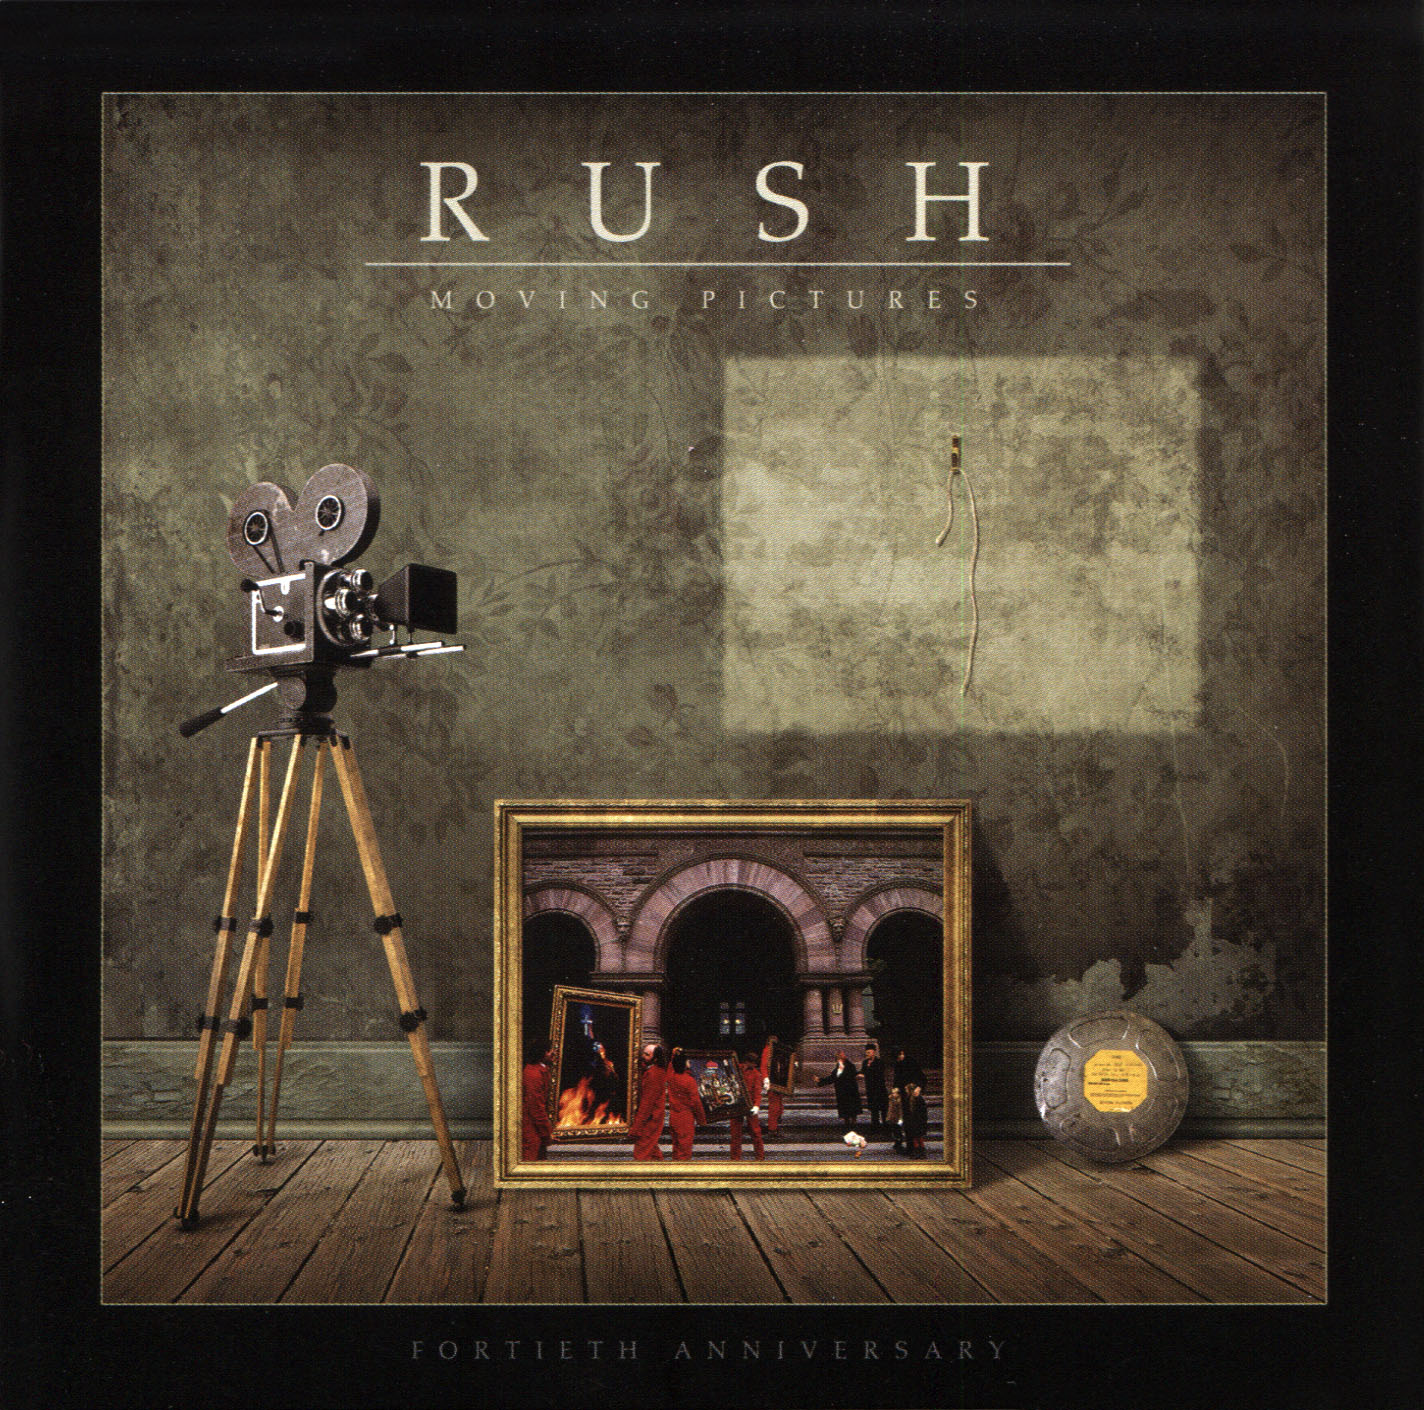 Rush: Moving Pictures 40th Anniversary Box Set - Album Artwork